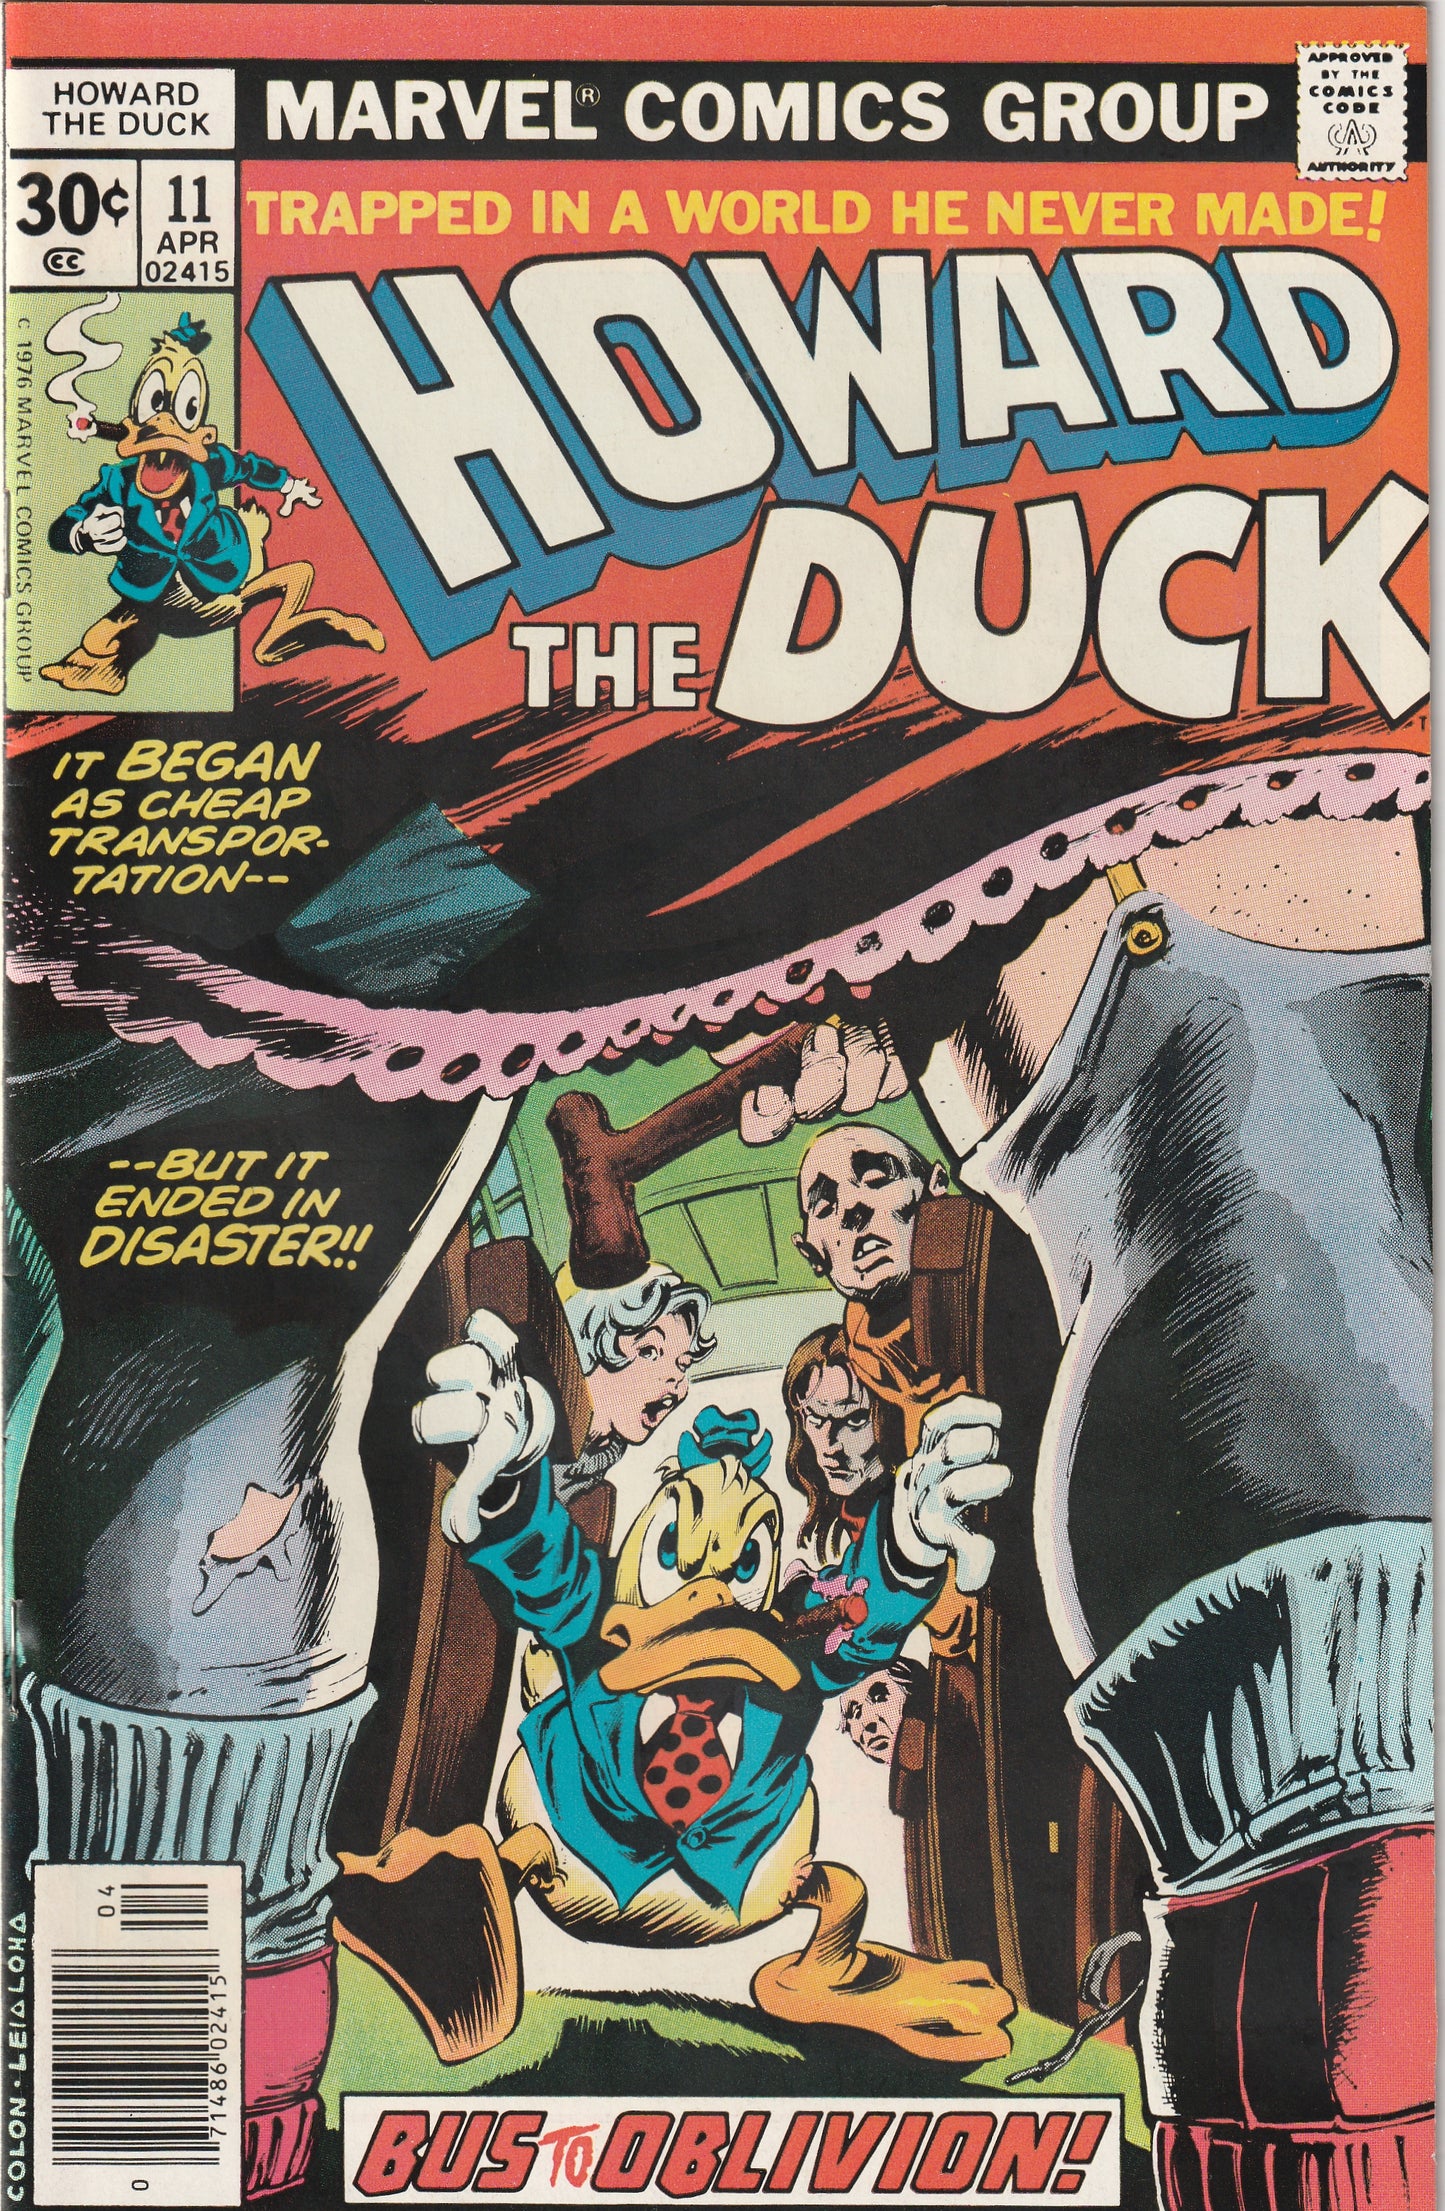 Howard the Duck #11 (1977)